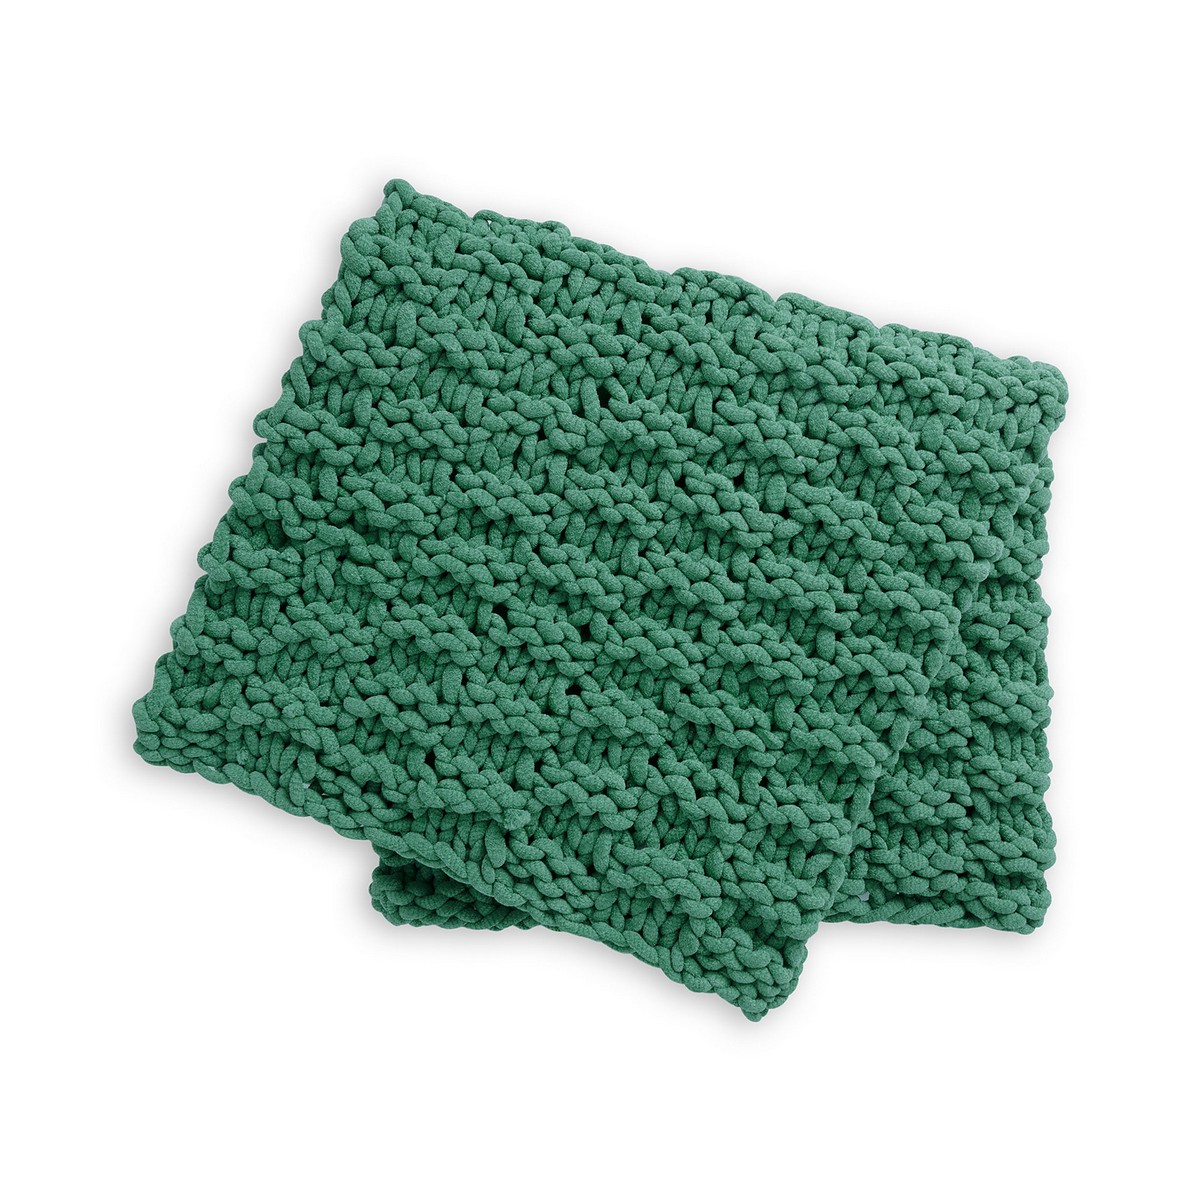 Knit Blanket Patterns